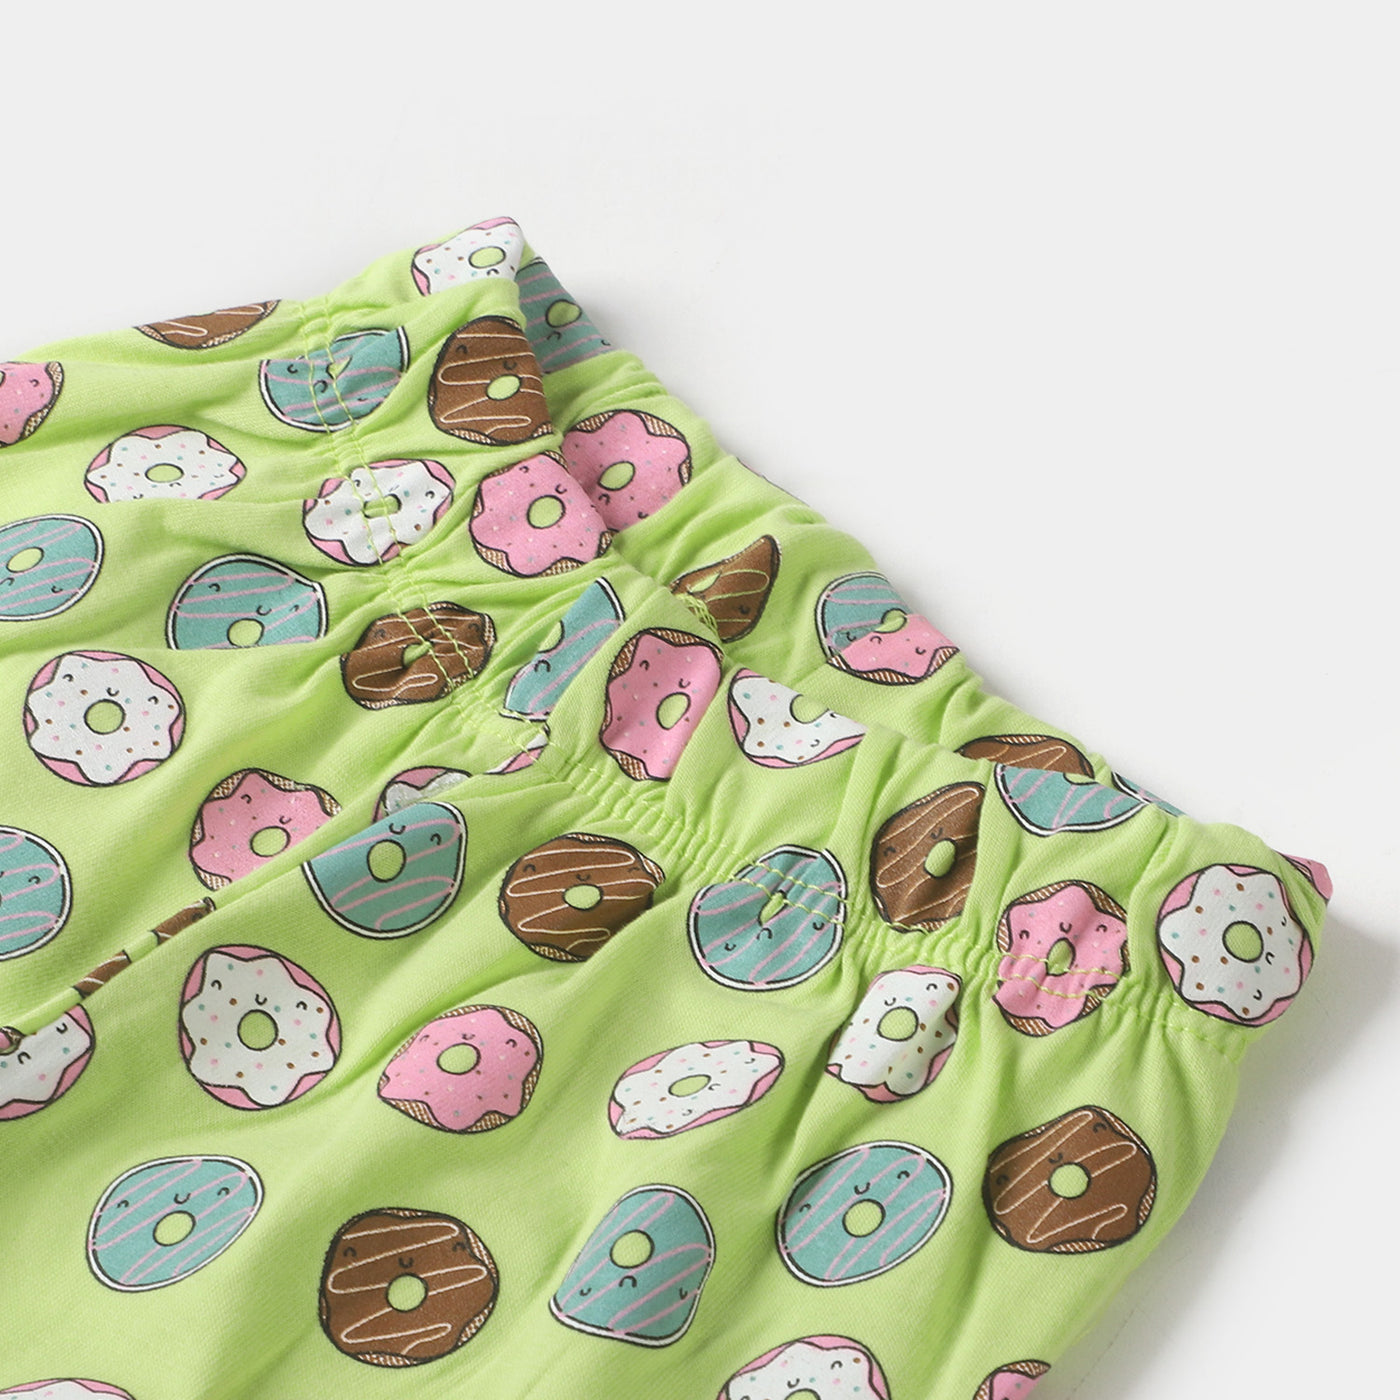 Infant Girls Knitted Night Suit Donut - Sharp Green